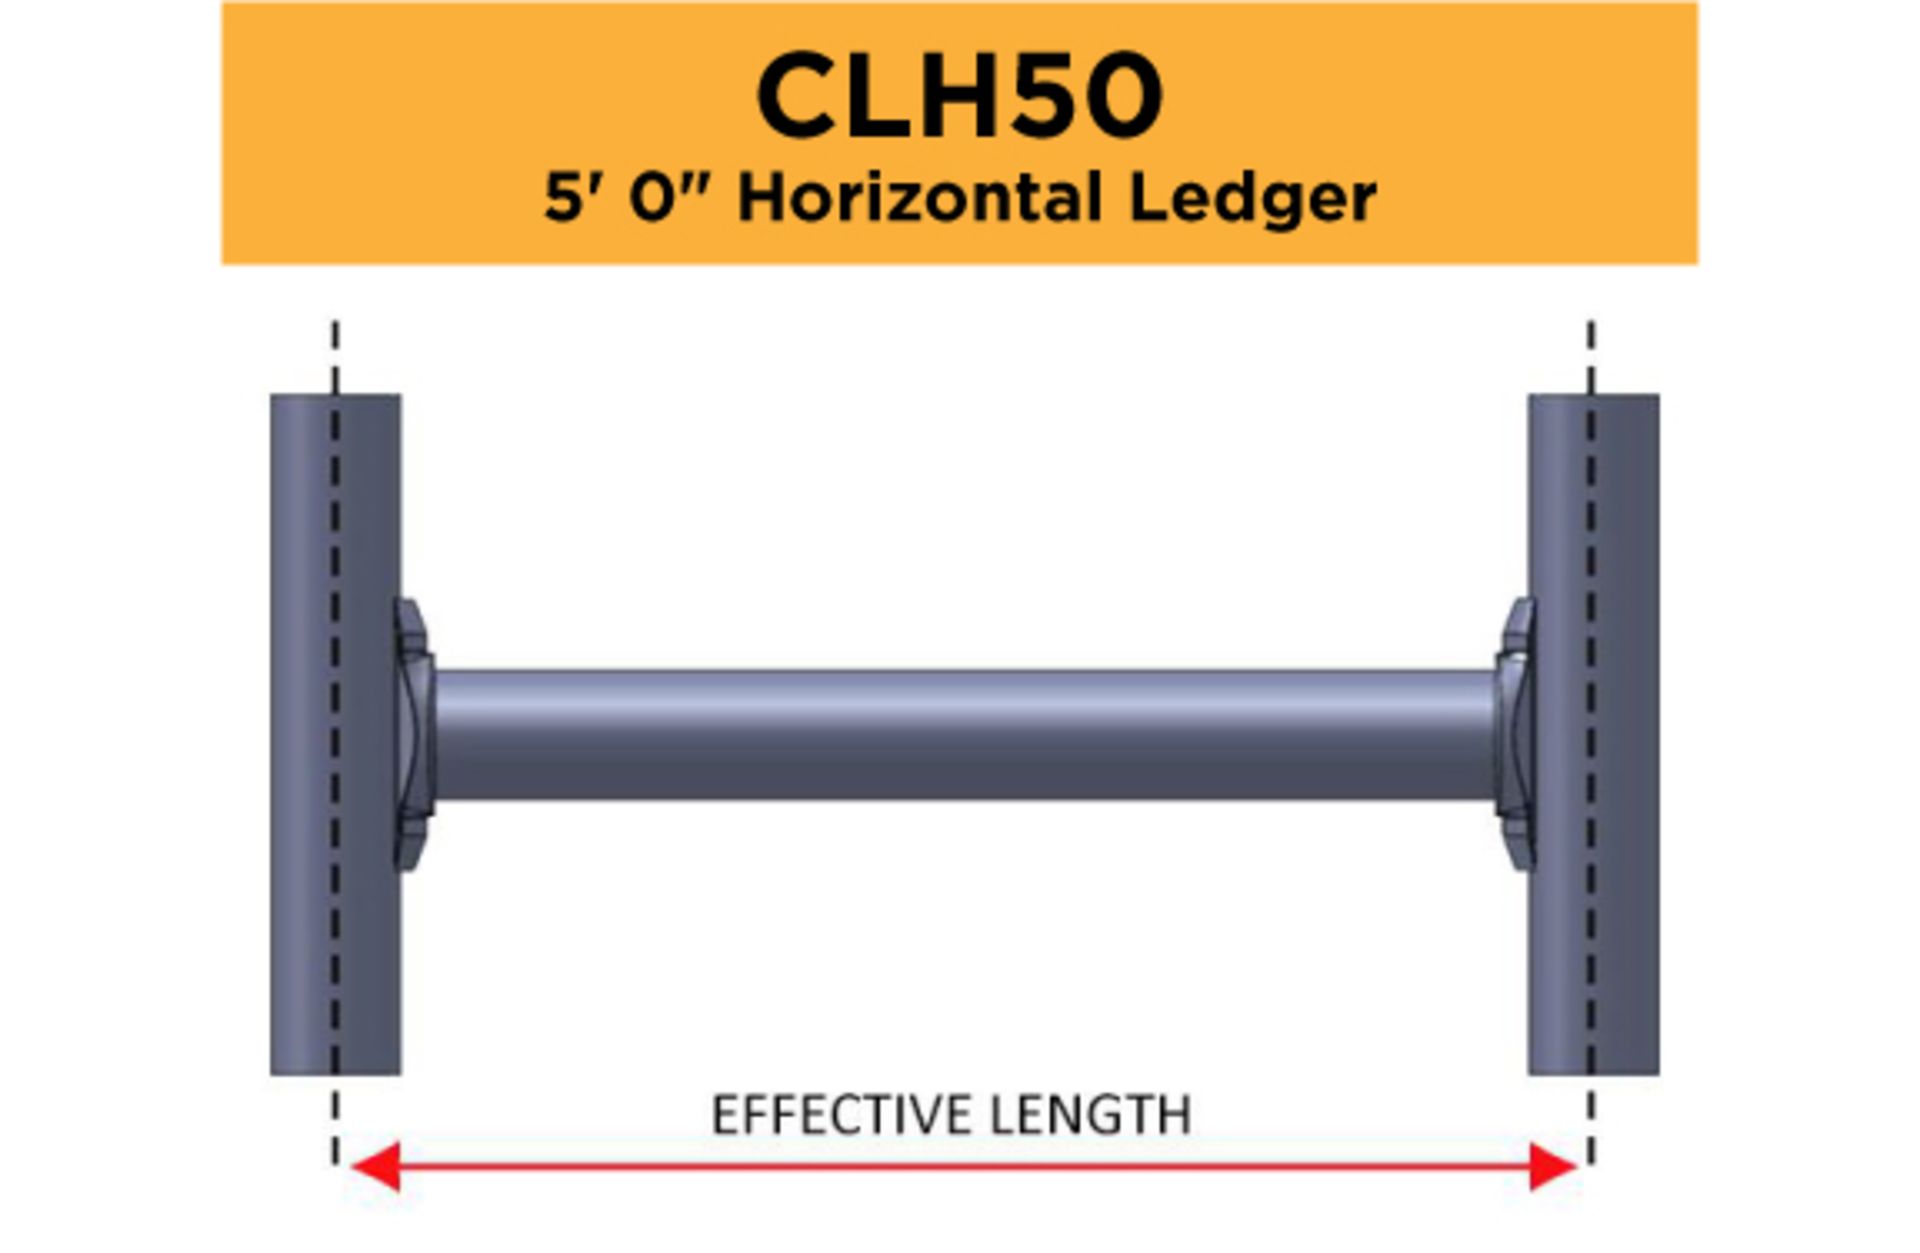 Lot of (600) 5' 0" Horizontal Ledger - Bay Length 60" (1.52M); Type: CLH50 - (4) Racks Per Lot -